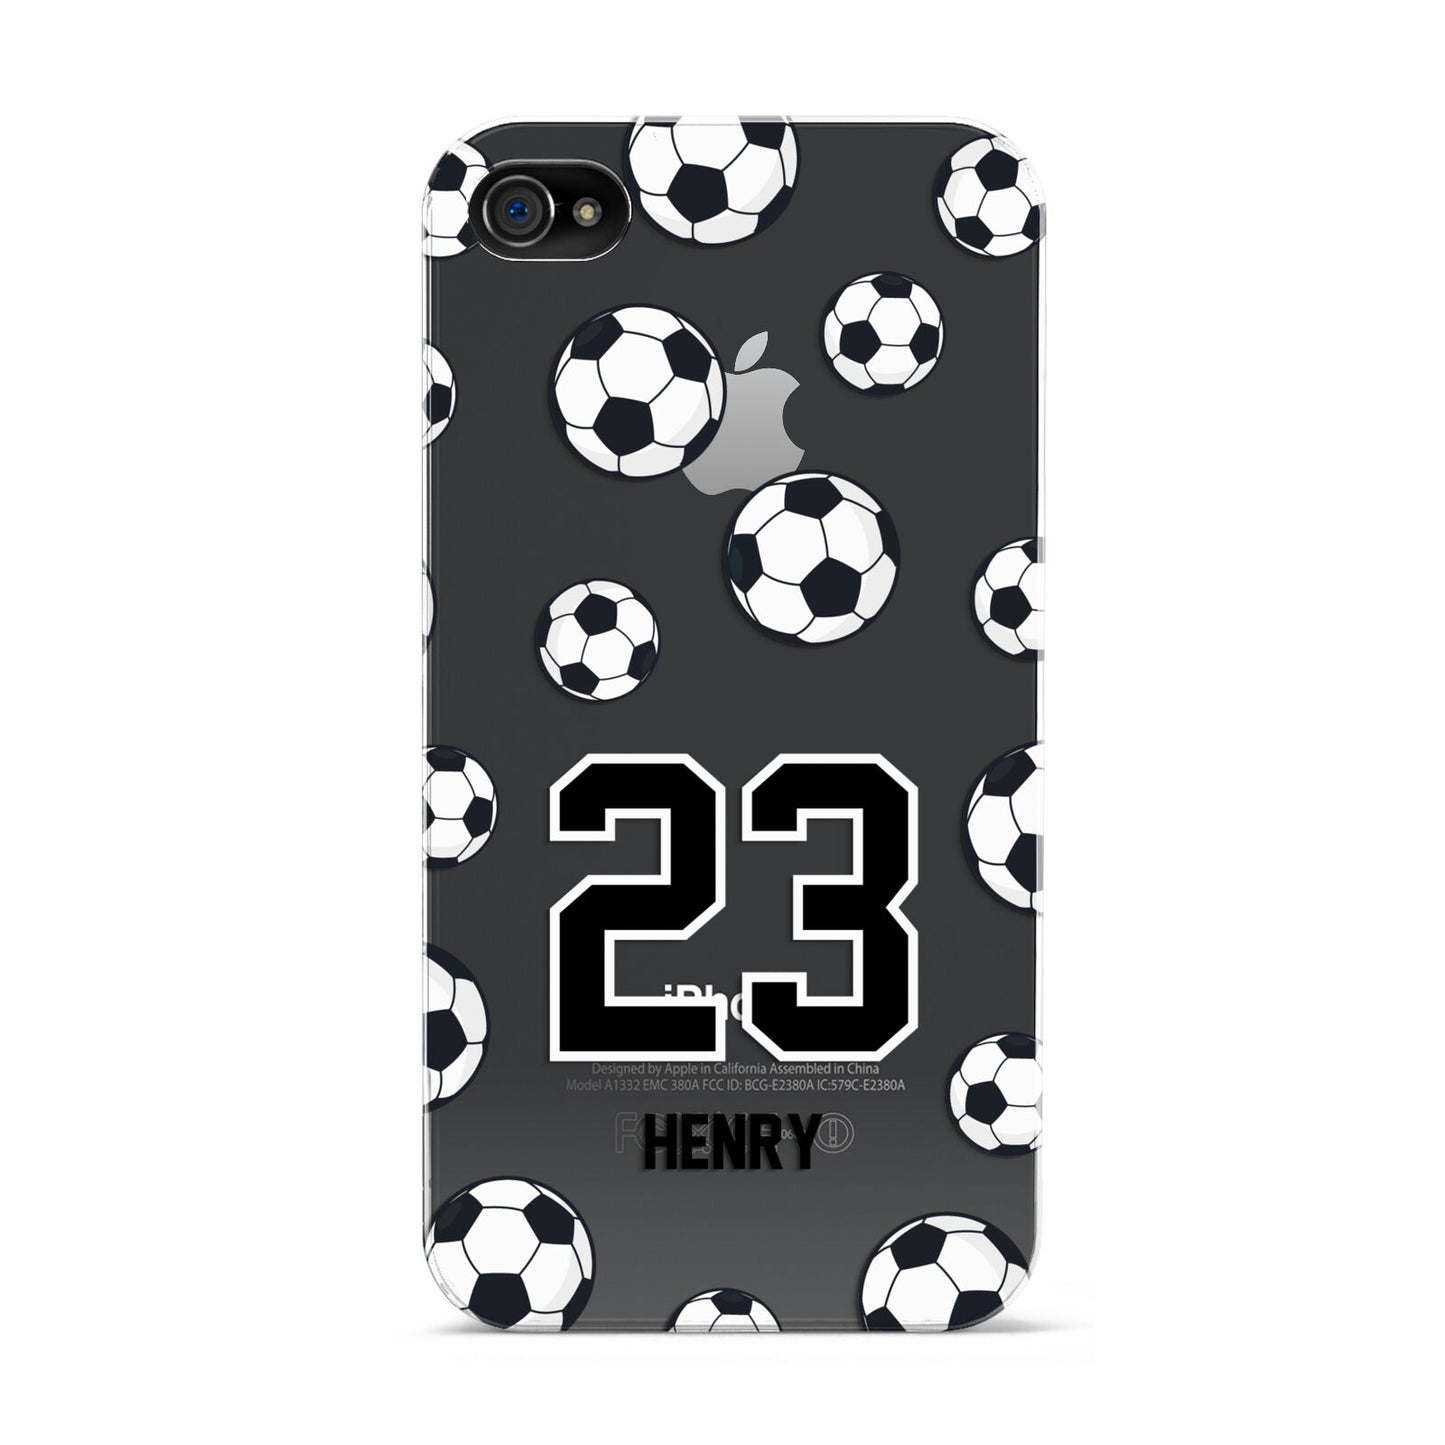 Personalised Football Apple iPhone 4s Case